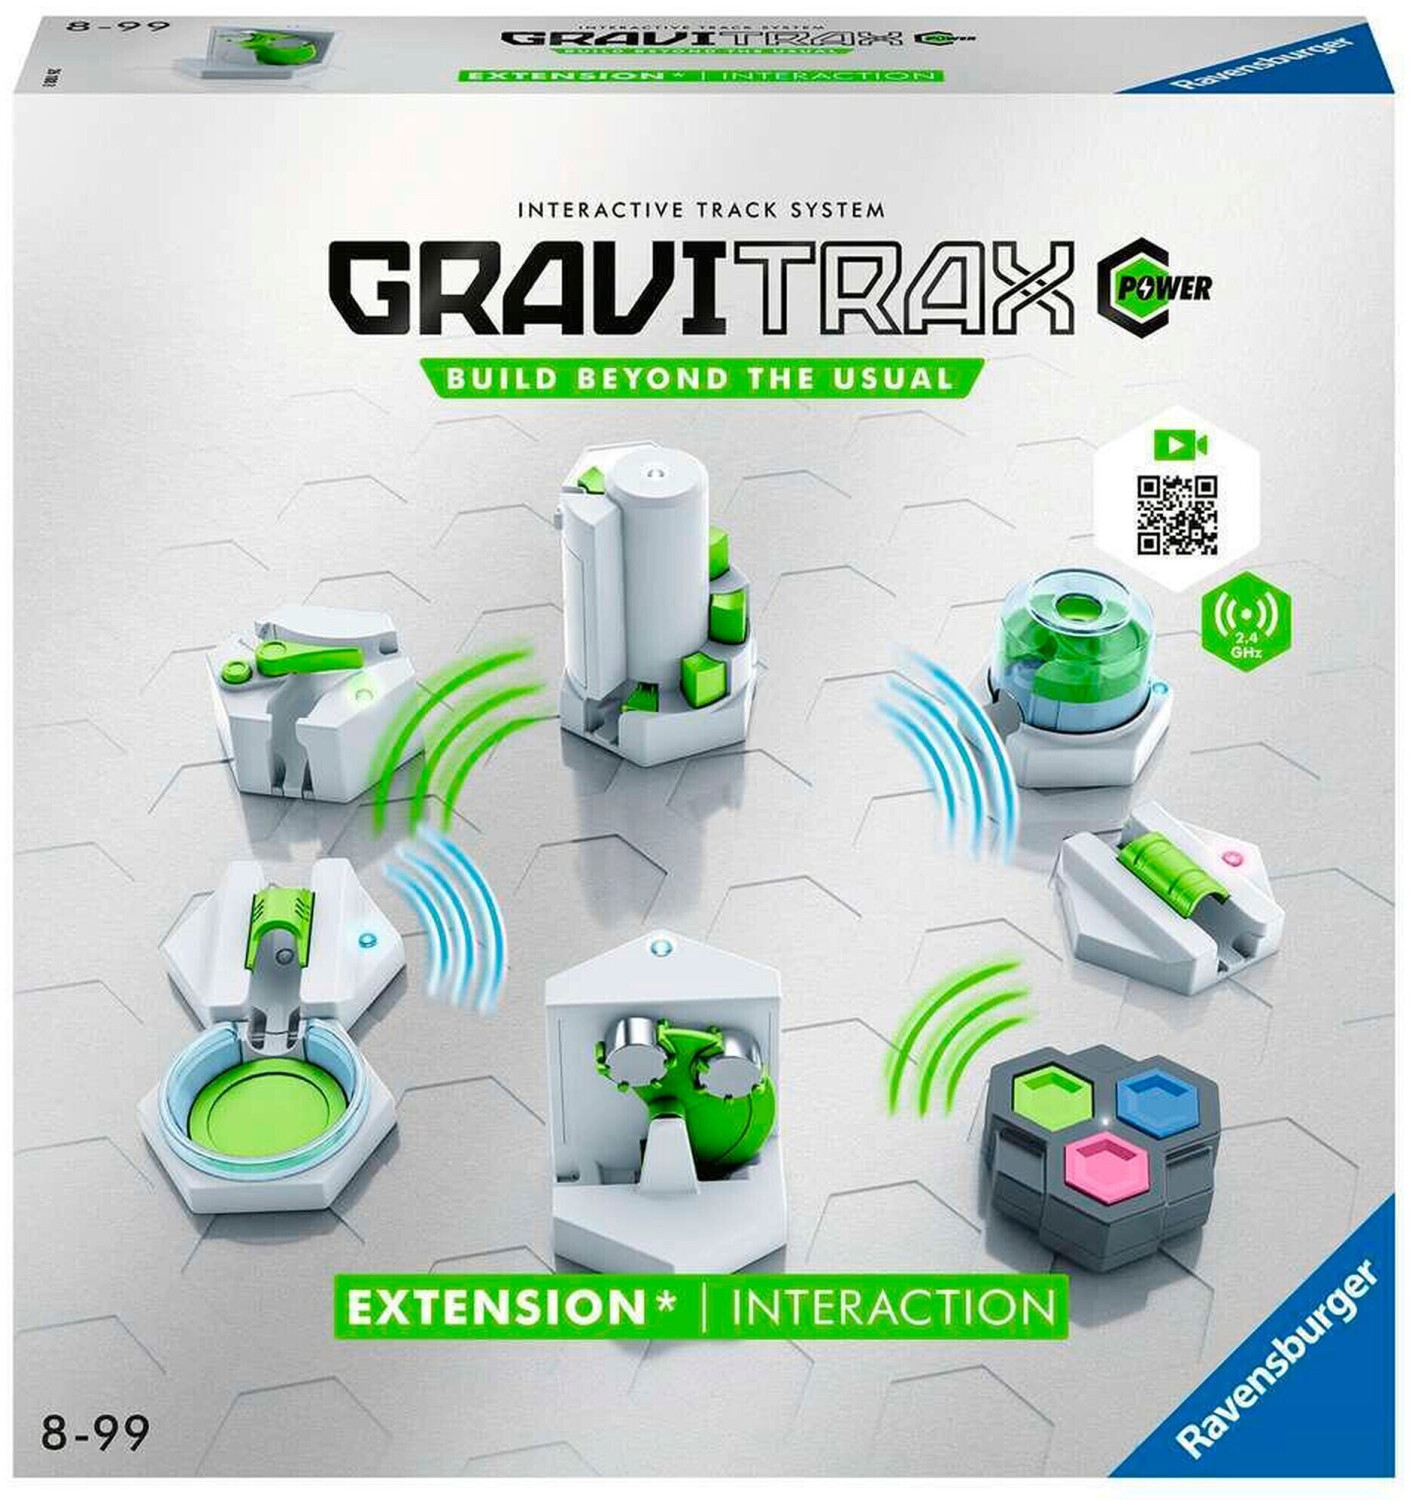 GRAVITRAX TRAMPOLINE ACCESSOIRES - CONSTRUCTION / Gravitrax et